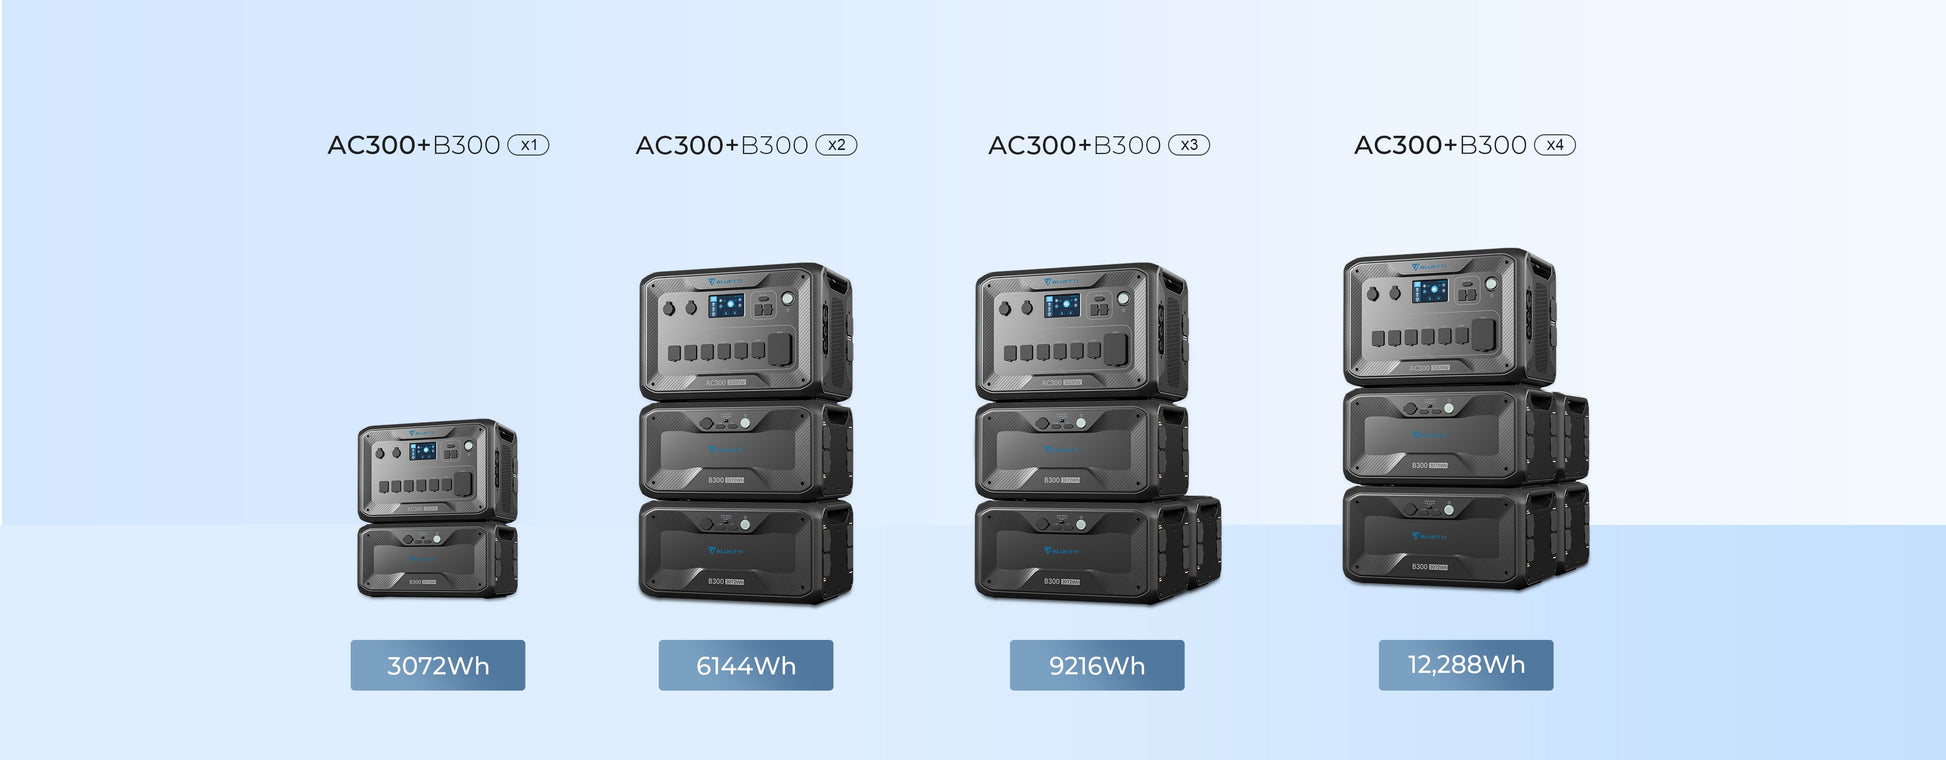 BLUETTI AC300 Expandable Power Station 3000W + B300 External Battery LiFePO4 Battery - Inverted Powers